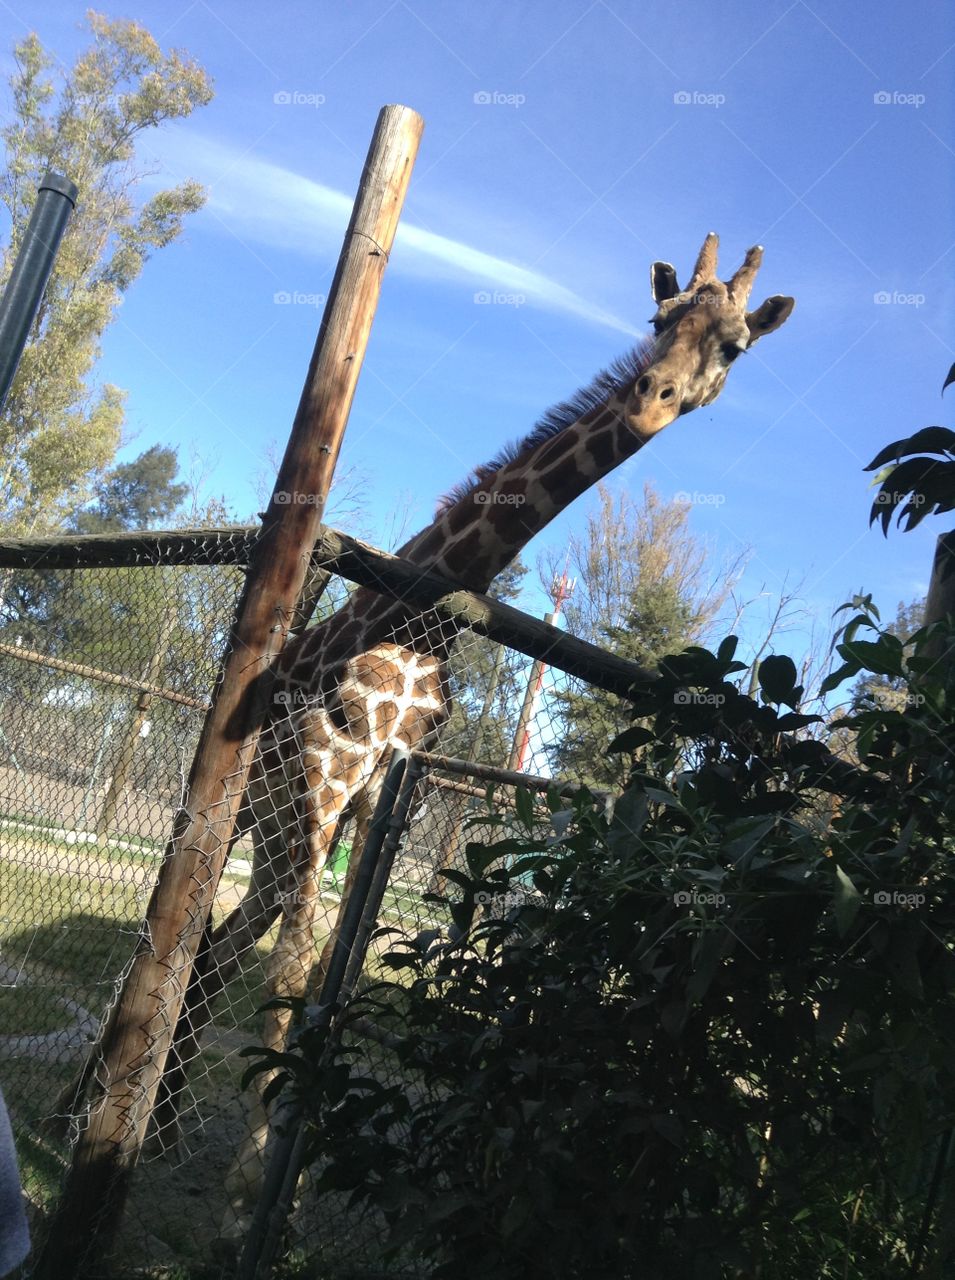 Giraffe. At a zoo in mexico